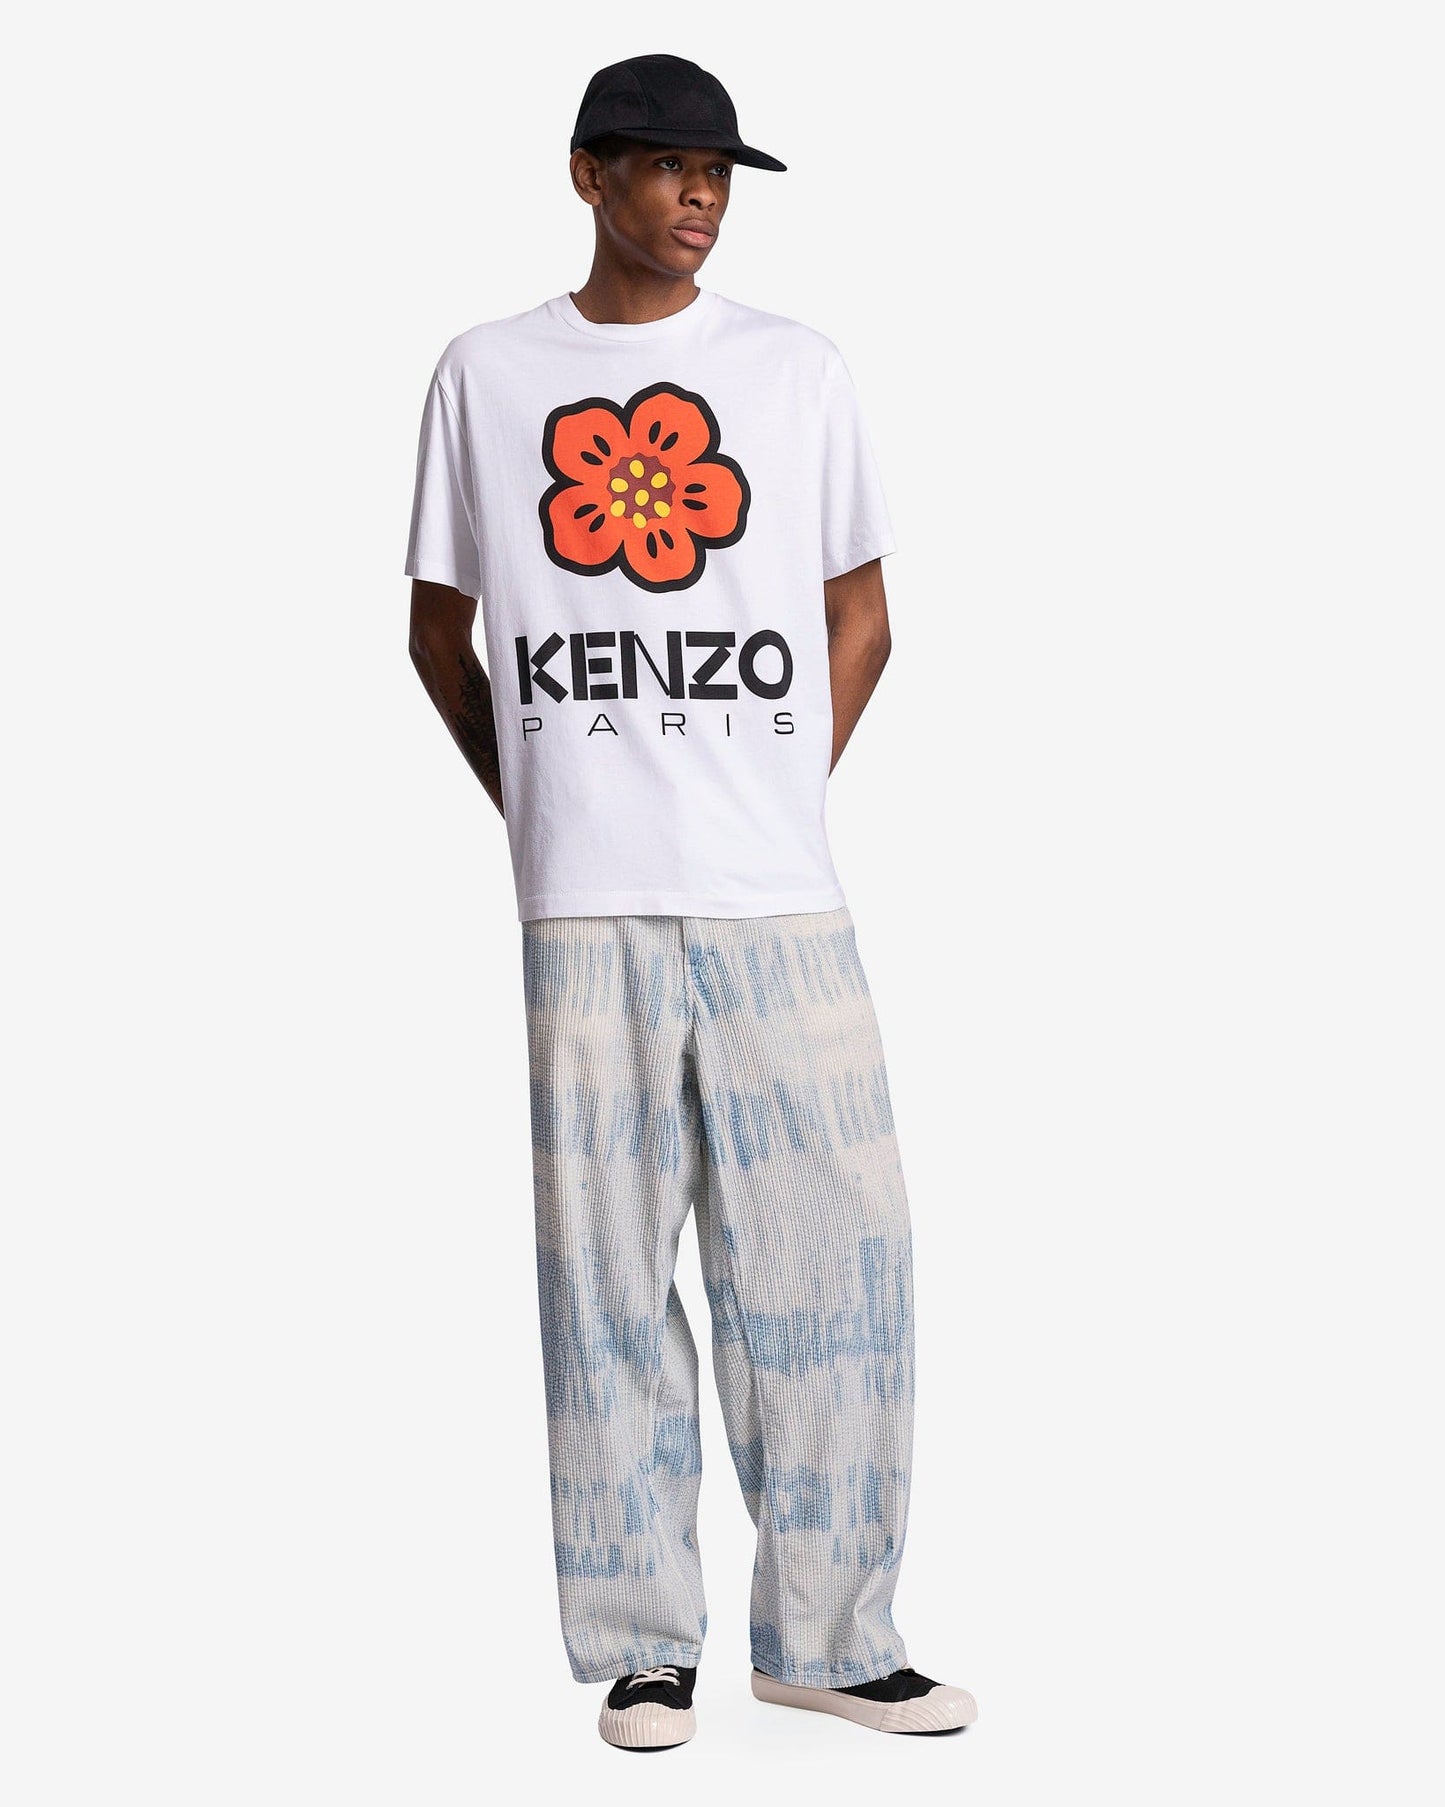 KENZO Men's T-Shirt Boke Flower Classic T-Shirt in White